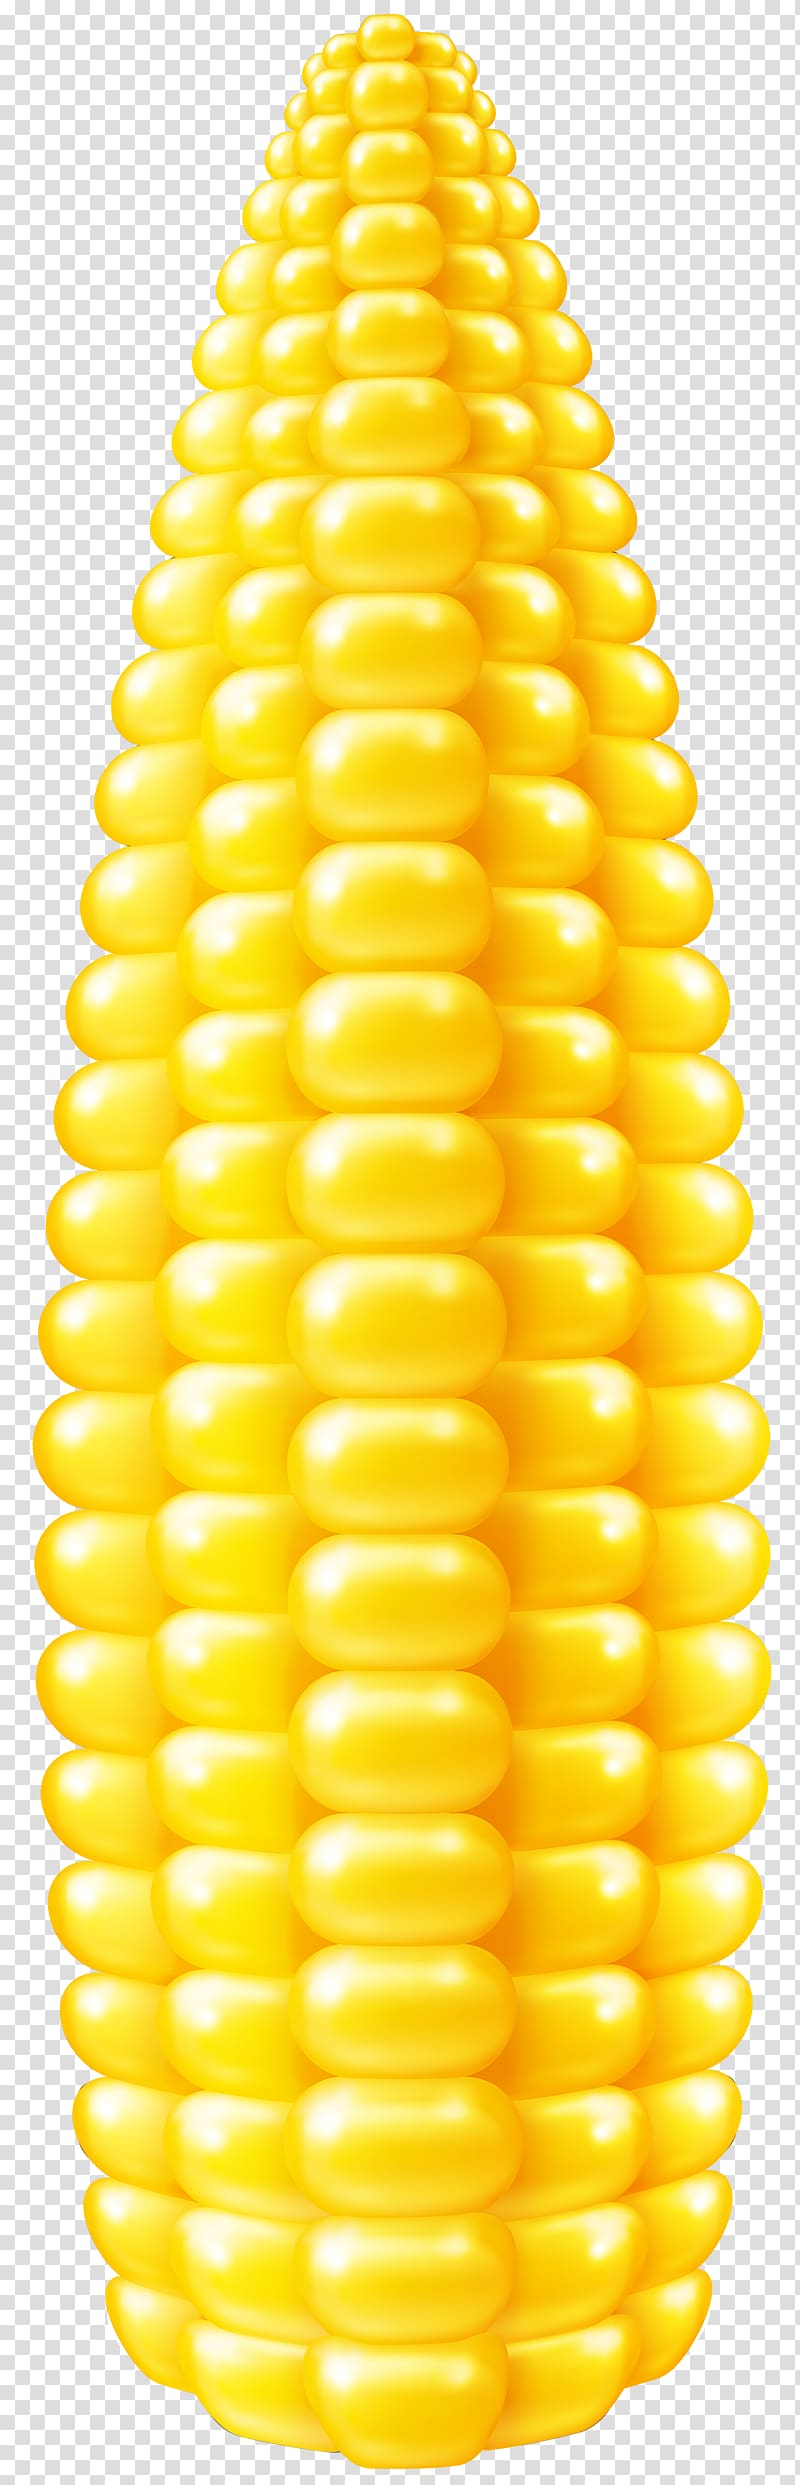 corn illustration, Corn on the cob Maize illustration Corncob, Corn transparent background PNG clipart